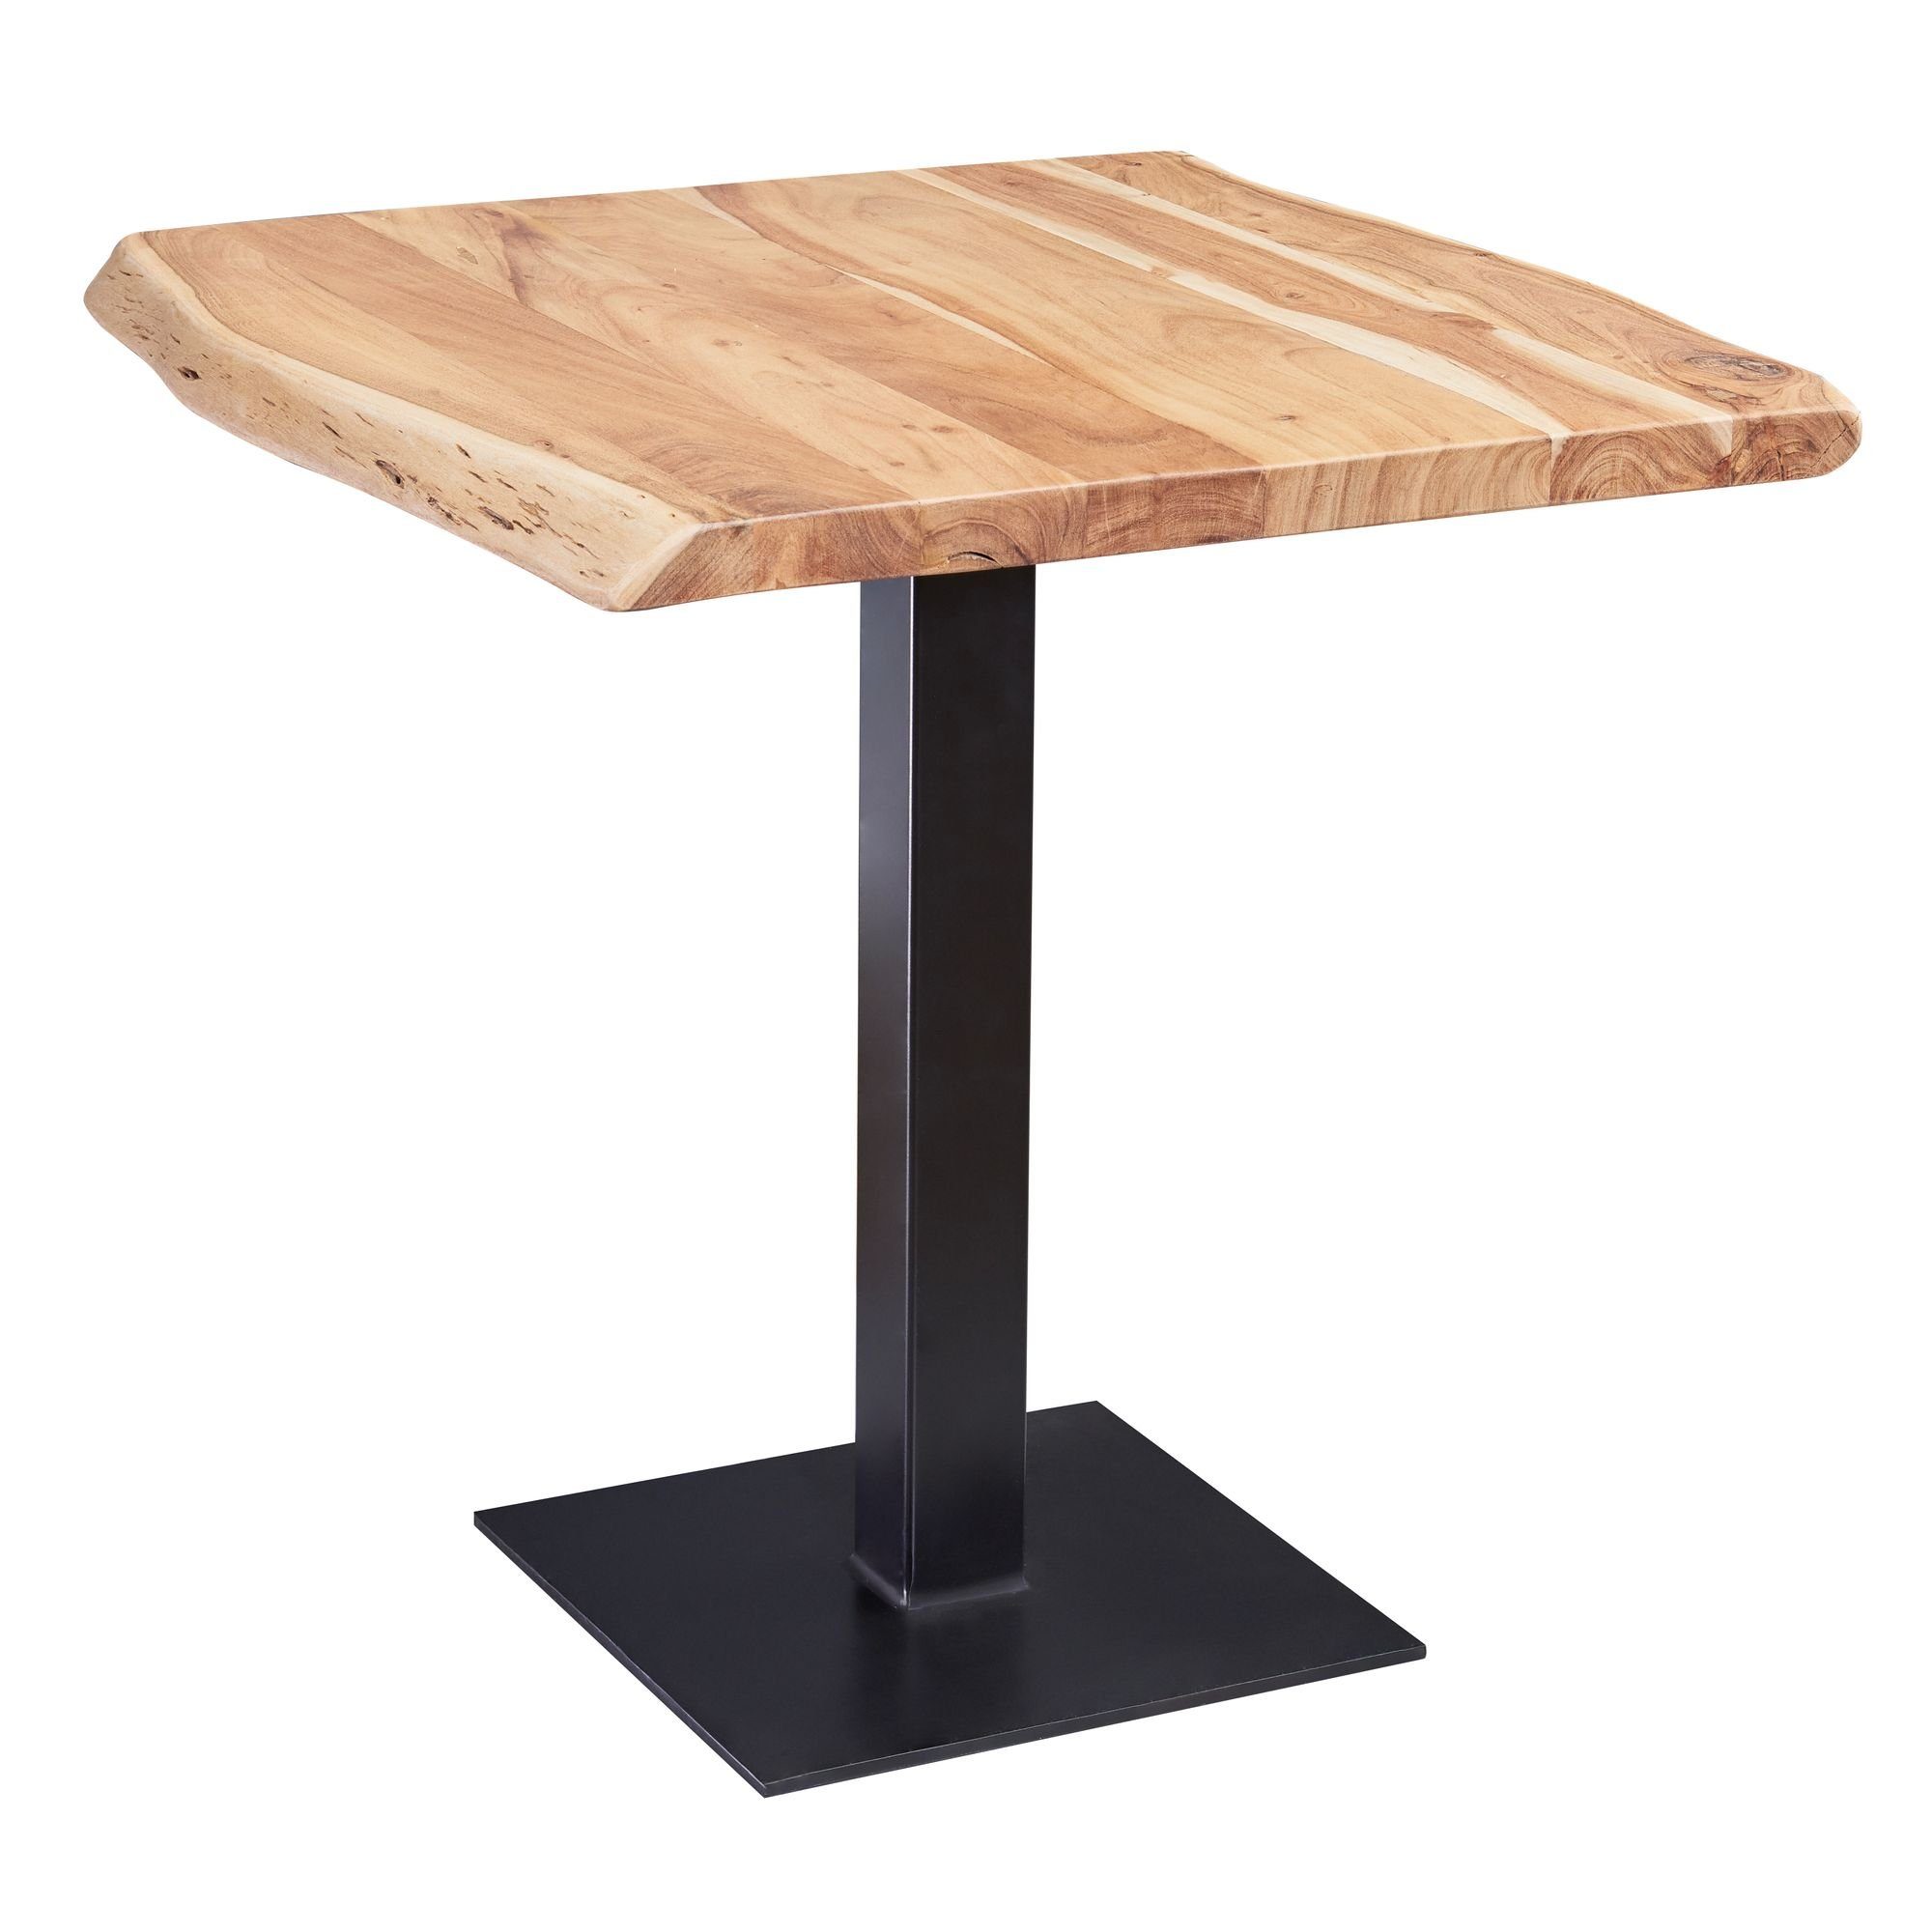 KADIMA DESIGN Esstisch Massivholz-Tisch, Unikat, quadratische Baumkante, Edelstahlstand